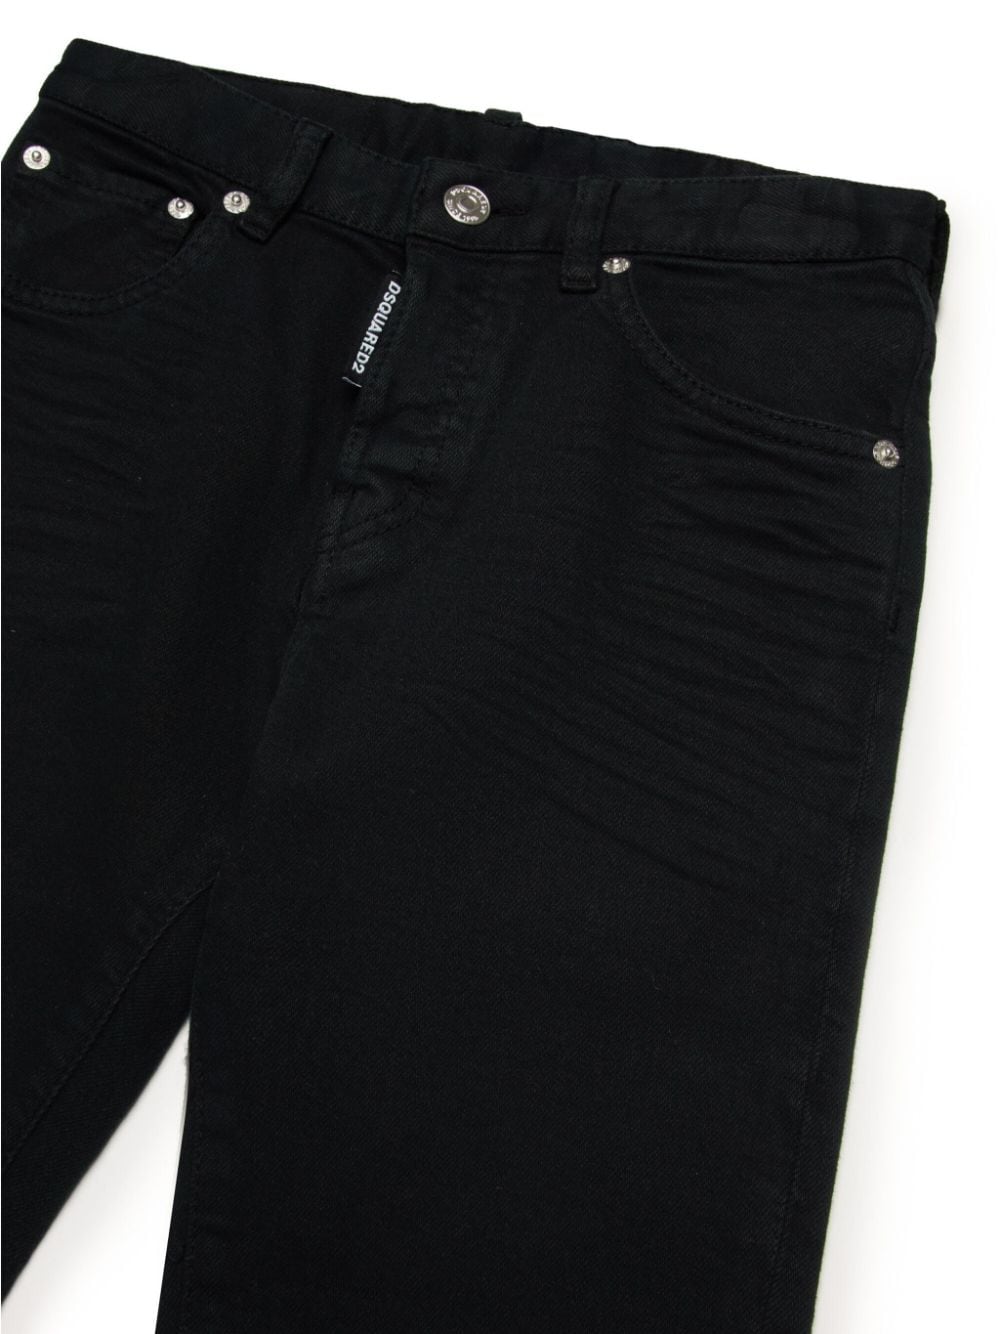 Black cotton jeans for children